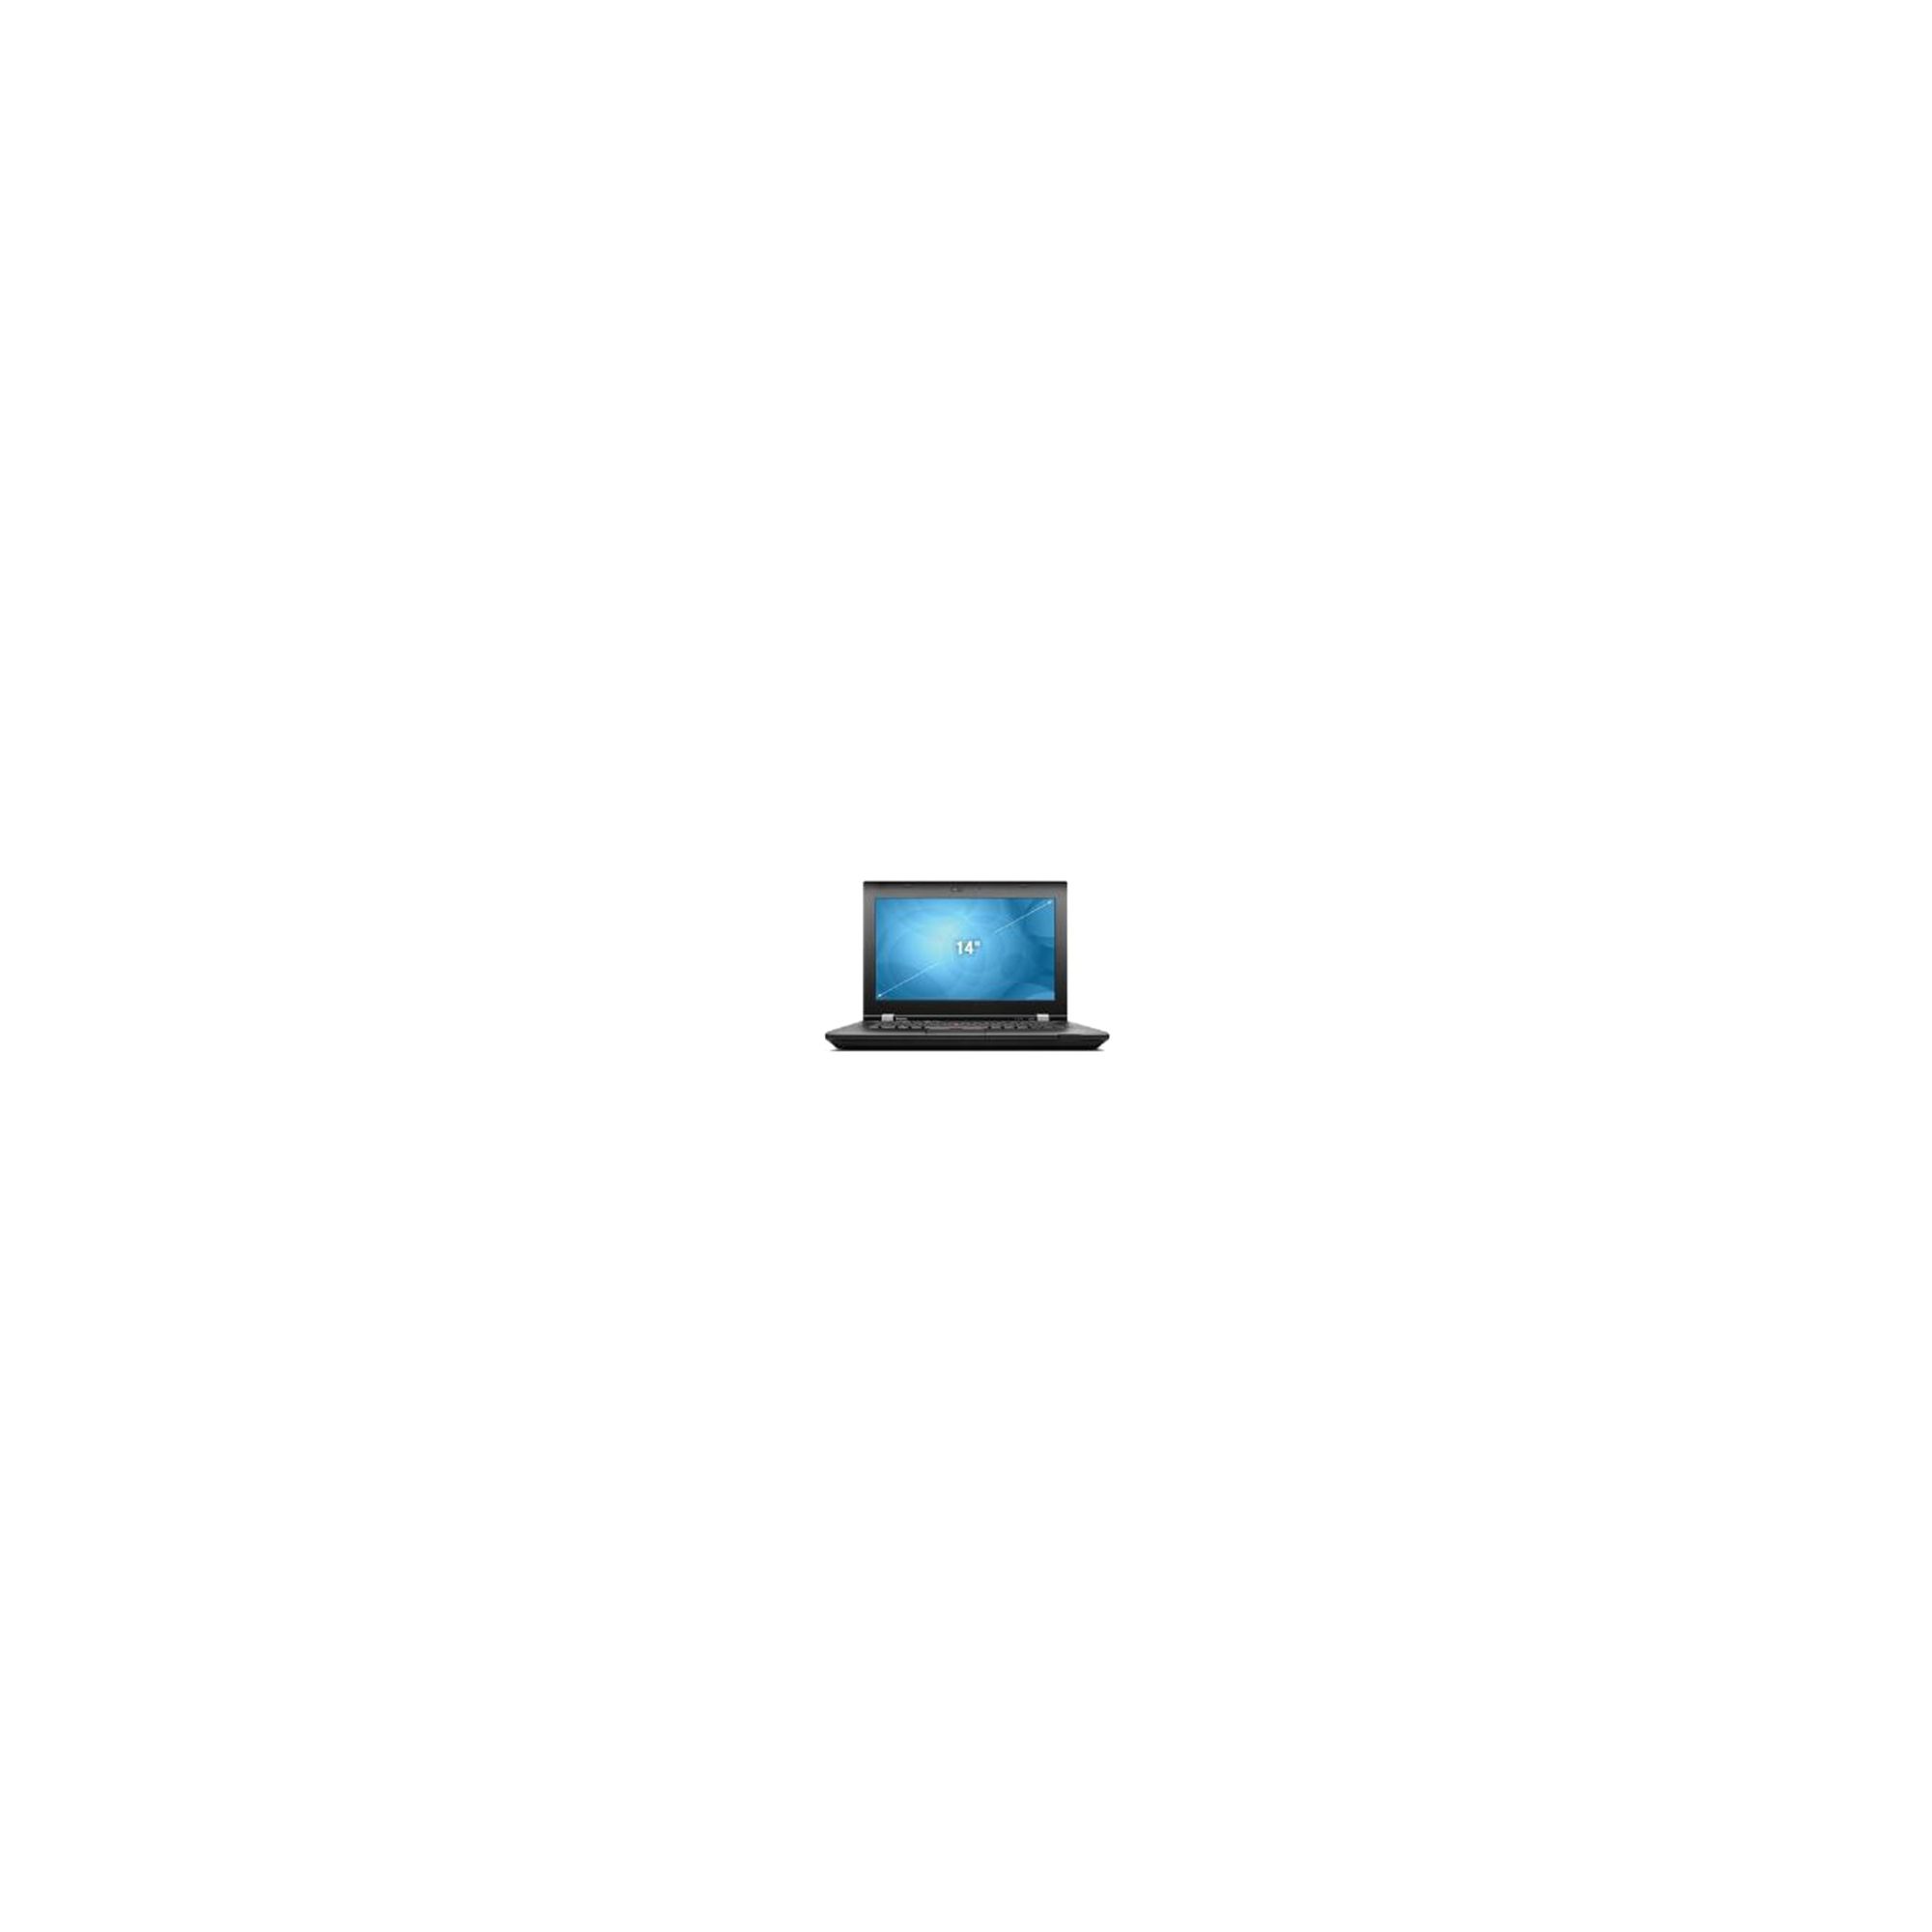 Lenovo ThinkPad L430 24683RG (14.0 inch) Notebook Core i3 (3110M) 2.4GHz 4GB 500GB DVD±RW WLAN BT Webcam Windows 7 Pro 64-bit/Windows 8 Pro 64-bit at Tescos Direct